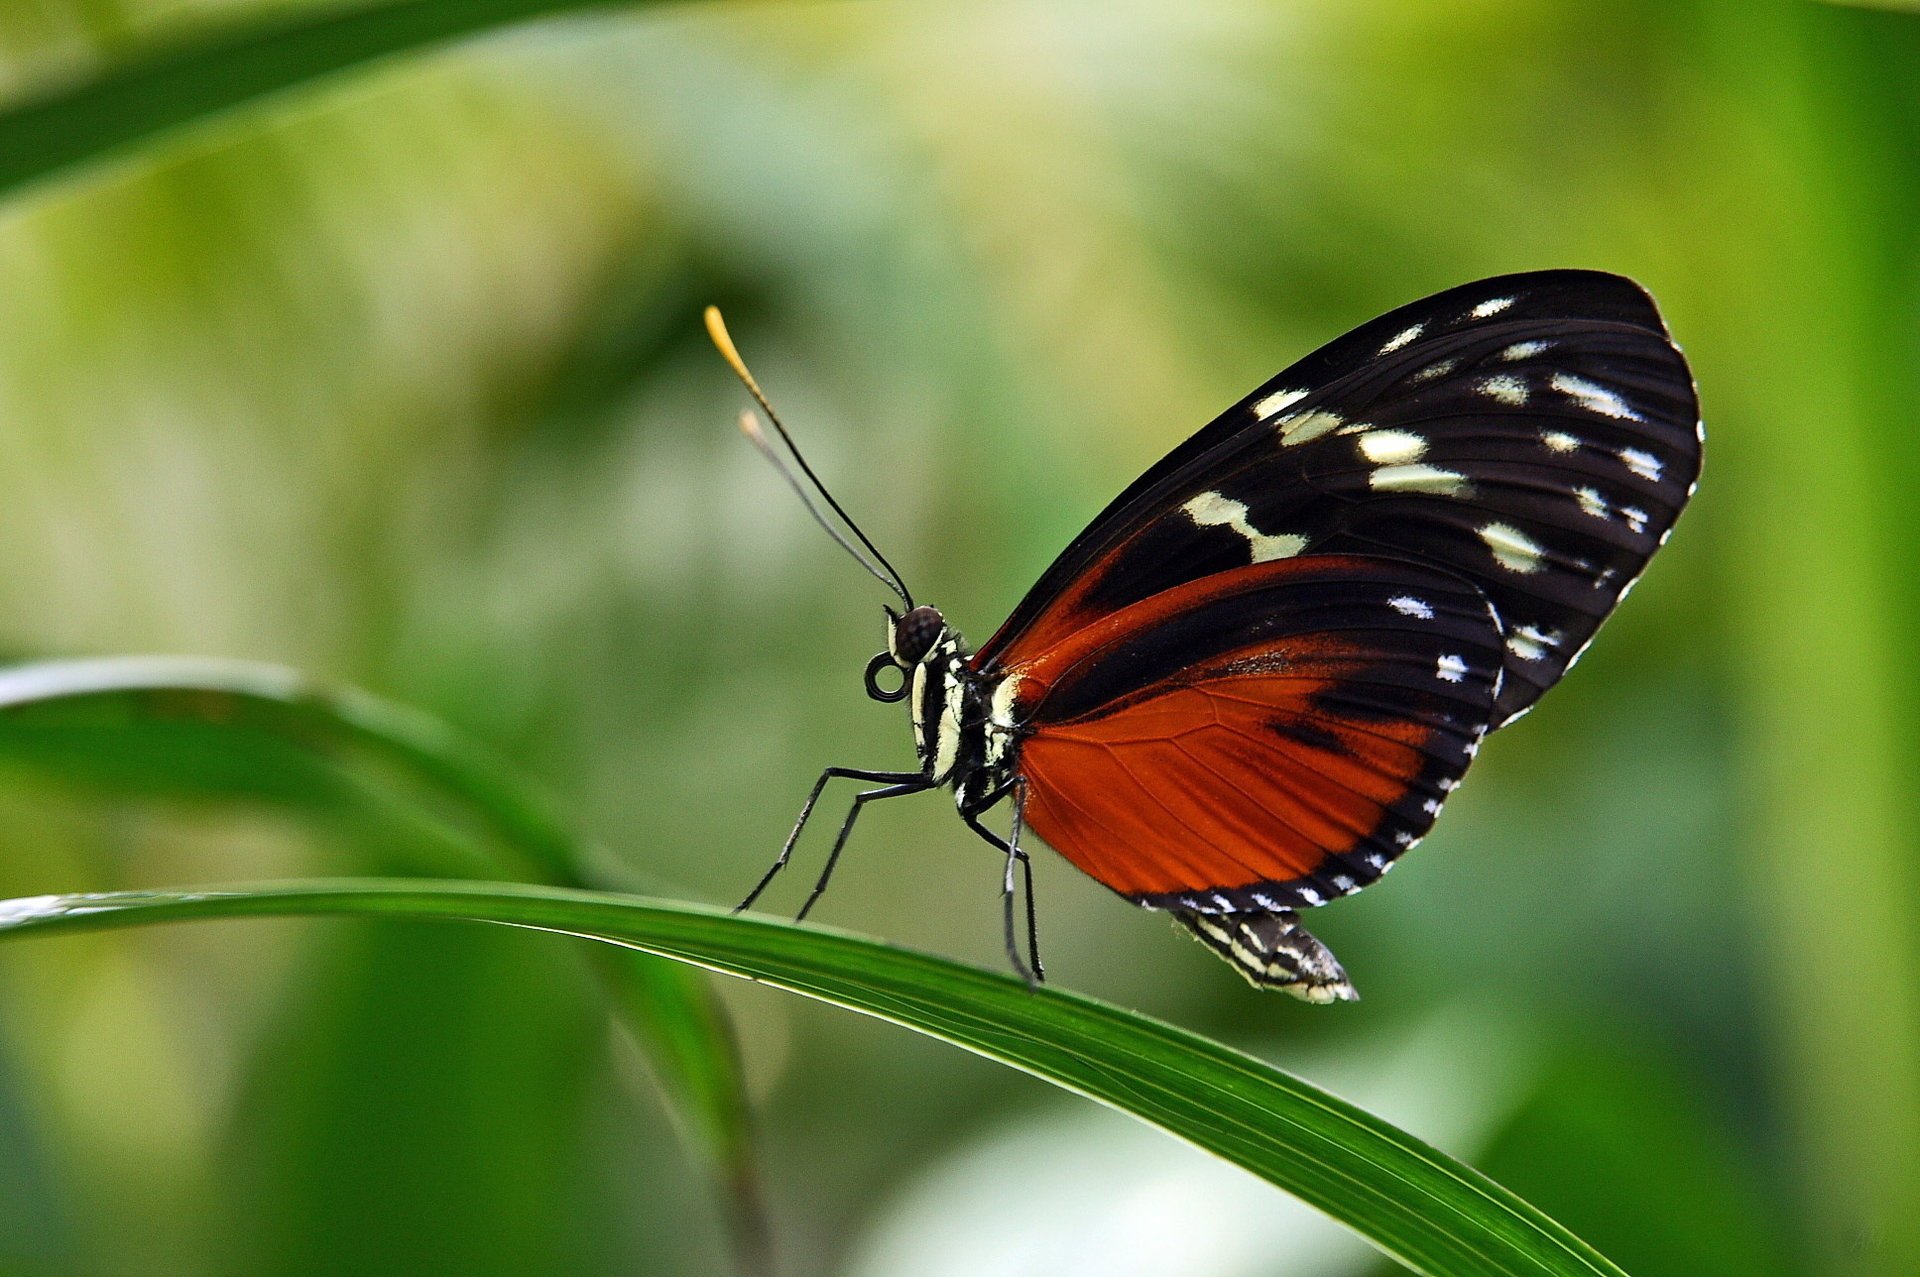 Пестрая бабочка геликоида сидит на листе